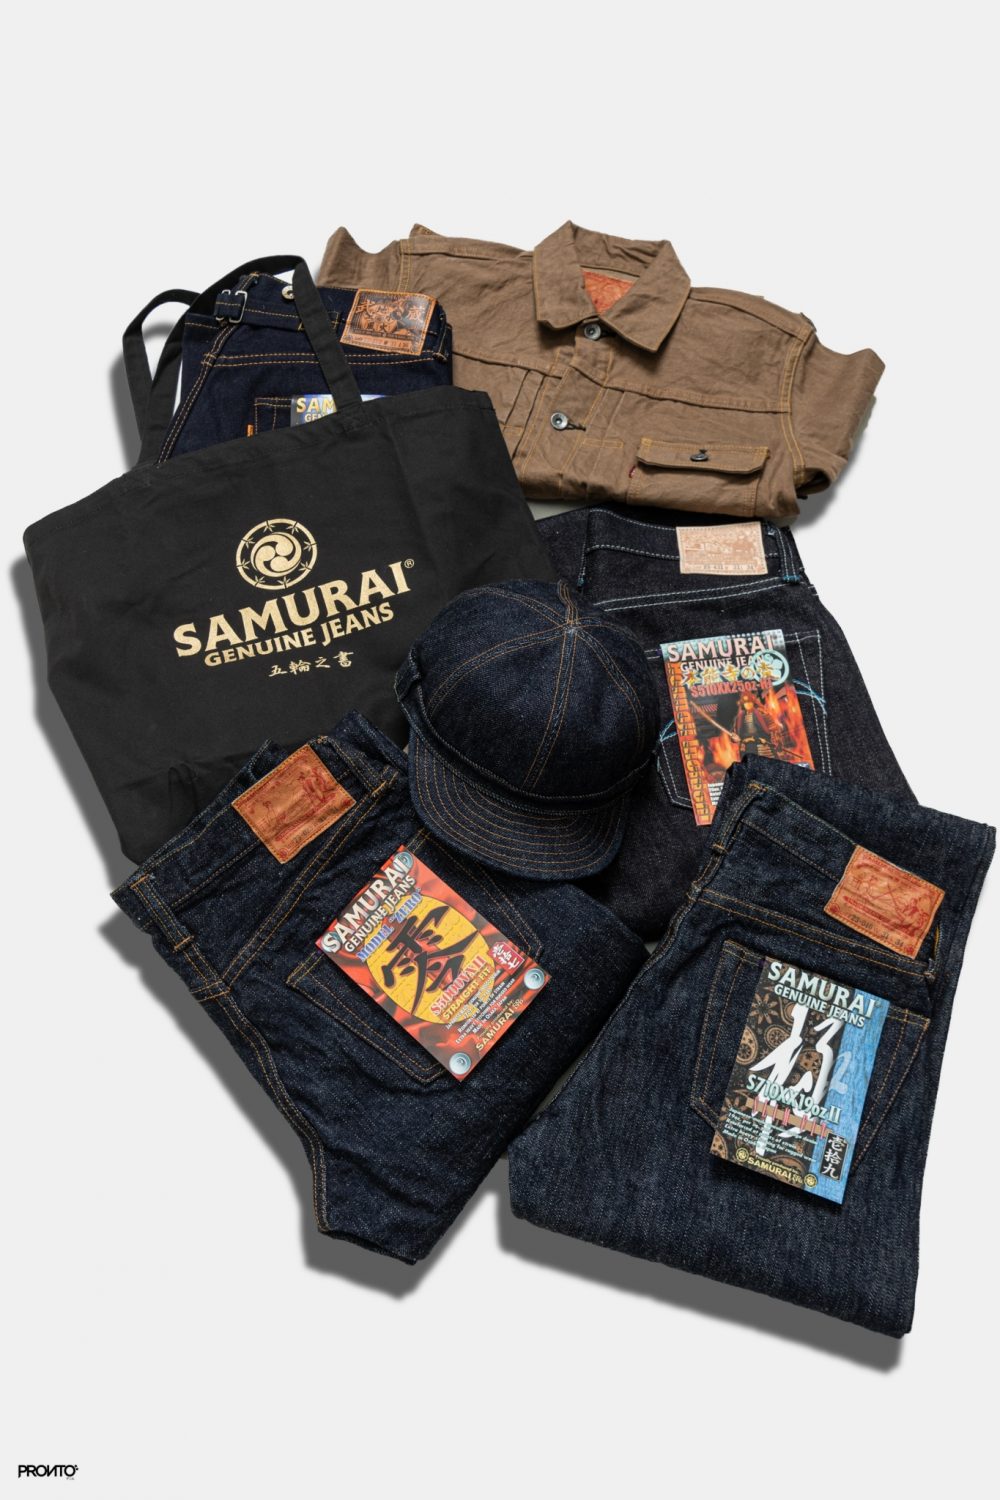 oni x samurai jeans online store